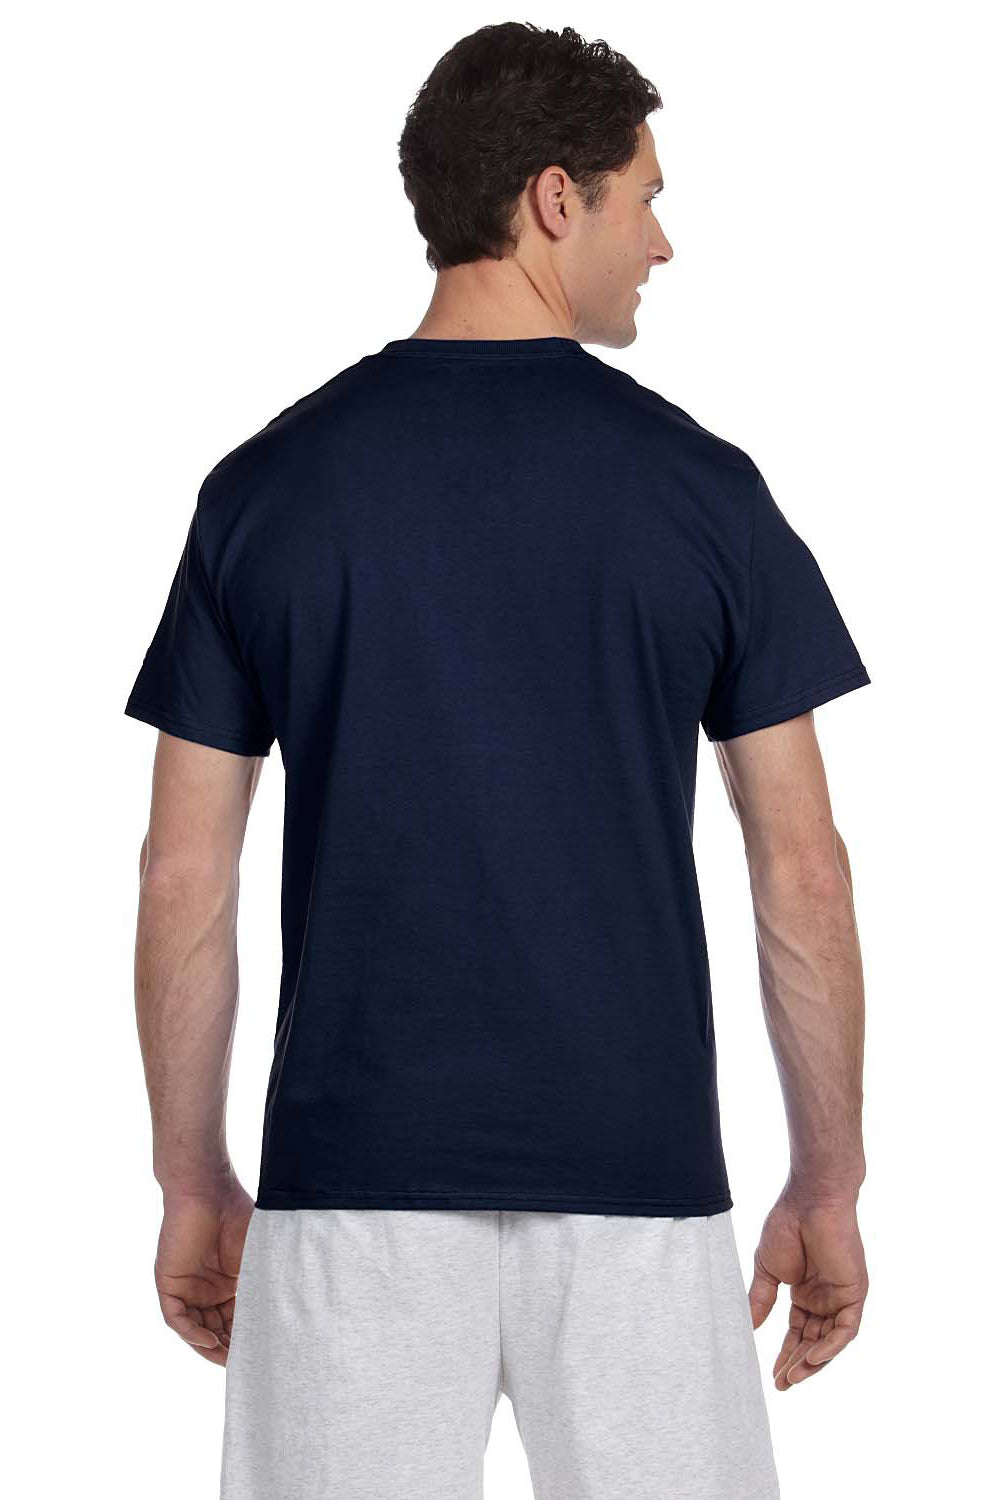 Champion T525C Mens Short Sleeve Crewneck T-Shirt Navy Blue Back